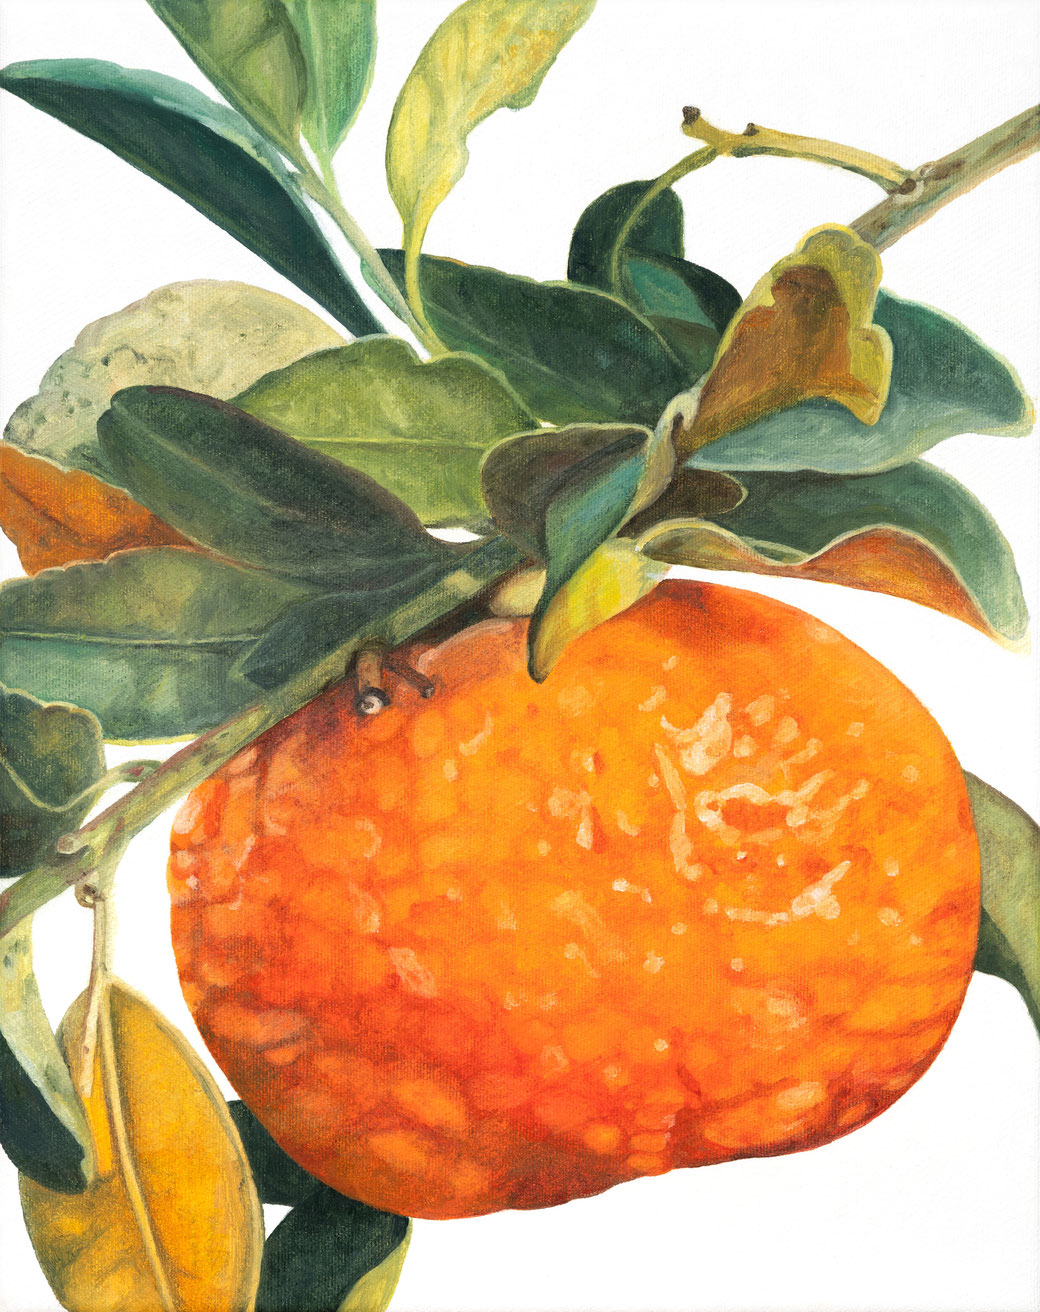 citrus x aurantium pomeranze,rutaceae, 24x30cm, oil on linen ©️brigitte hofherr 